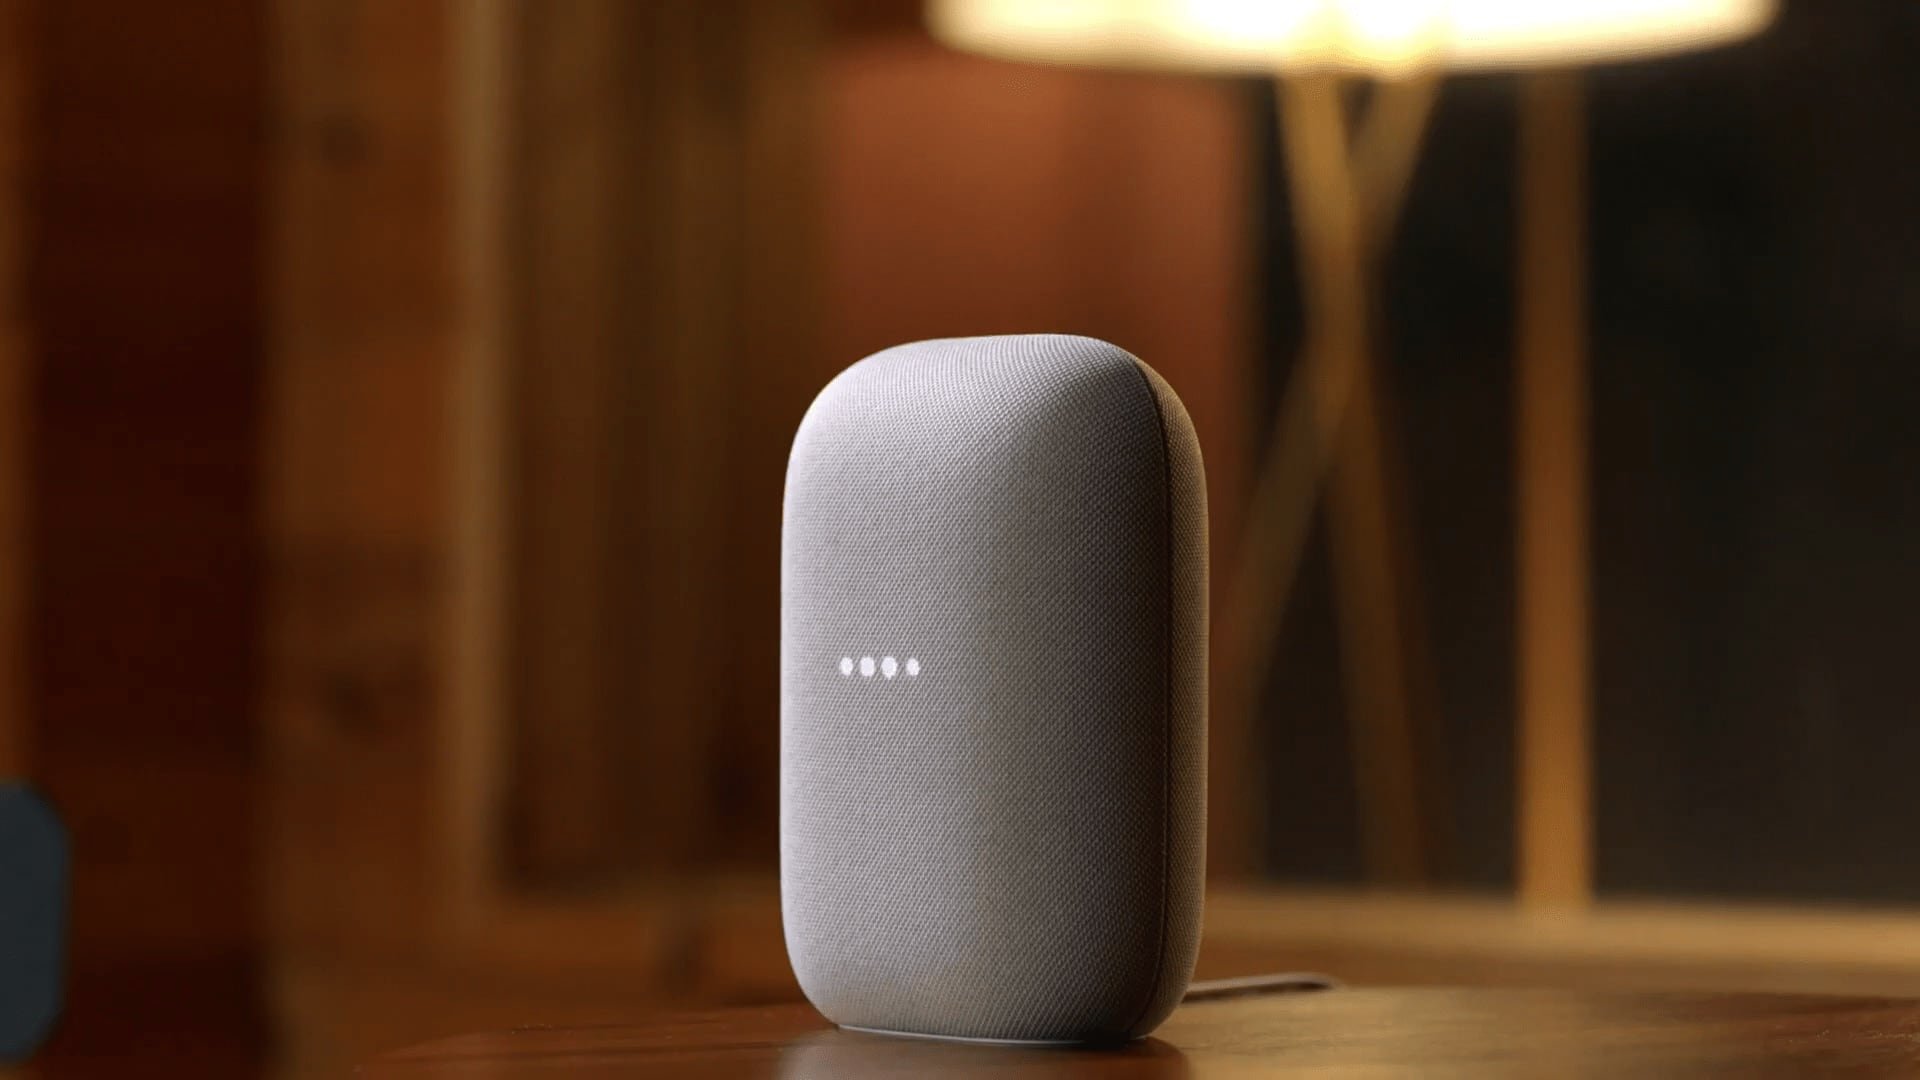 Google Nest Audio smart speaker delivers more bass and volume